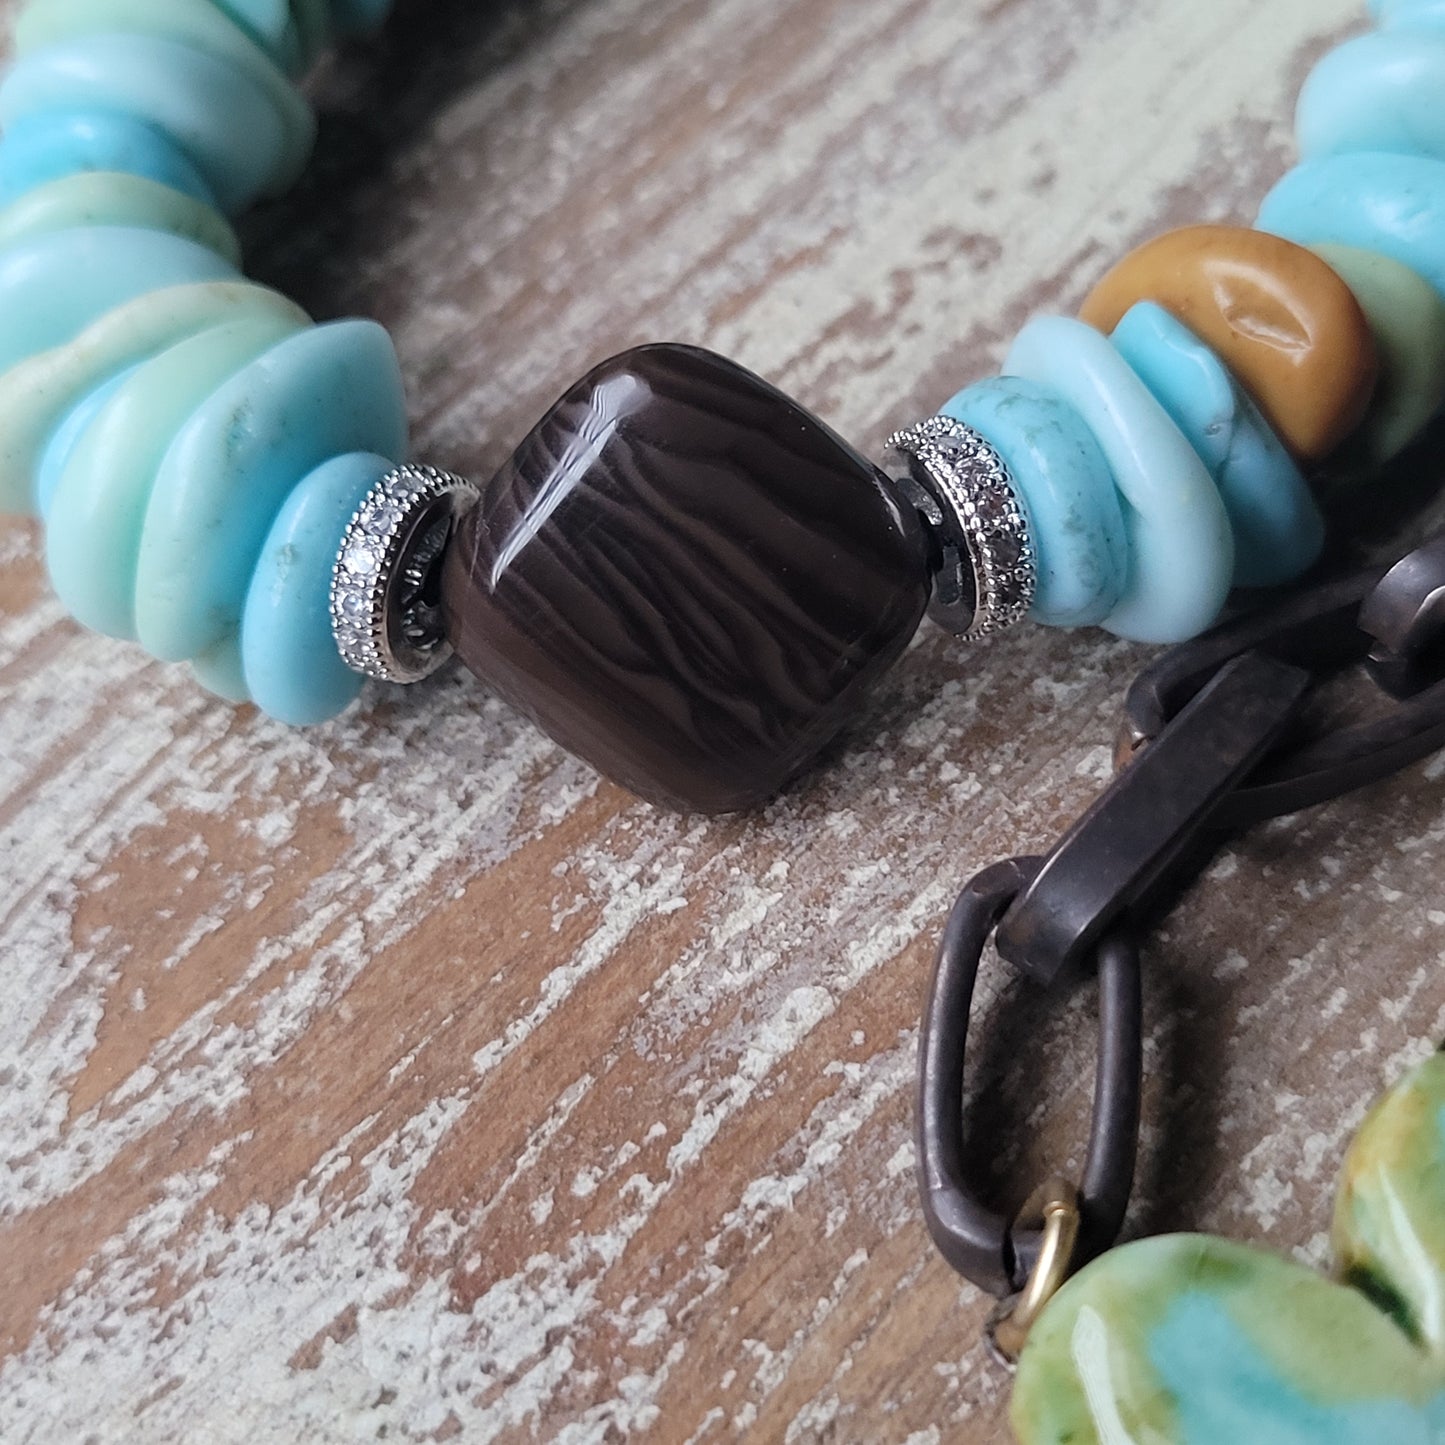 Turquoise Love Bracelet Set, boho chic turquoise magnesite, coffee Jasper,  pave cz rondelles, rustic cable chain bracelet